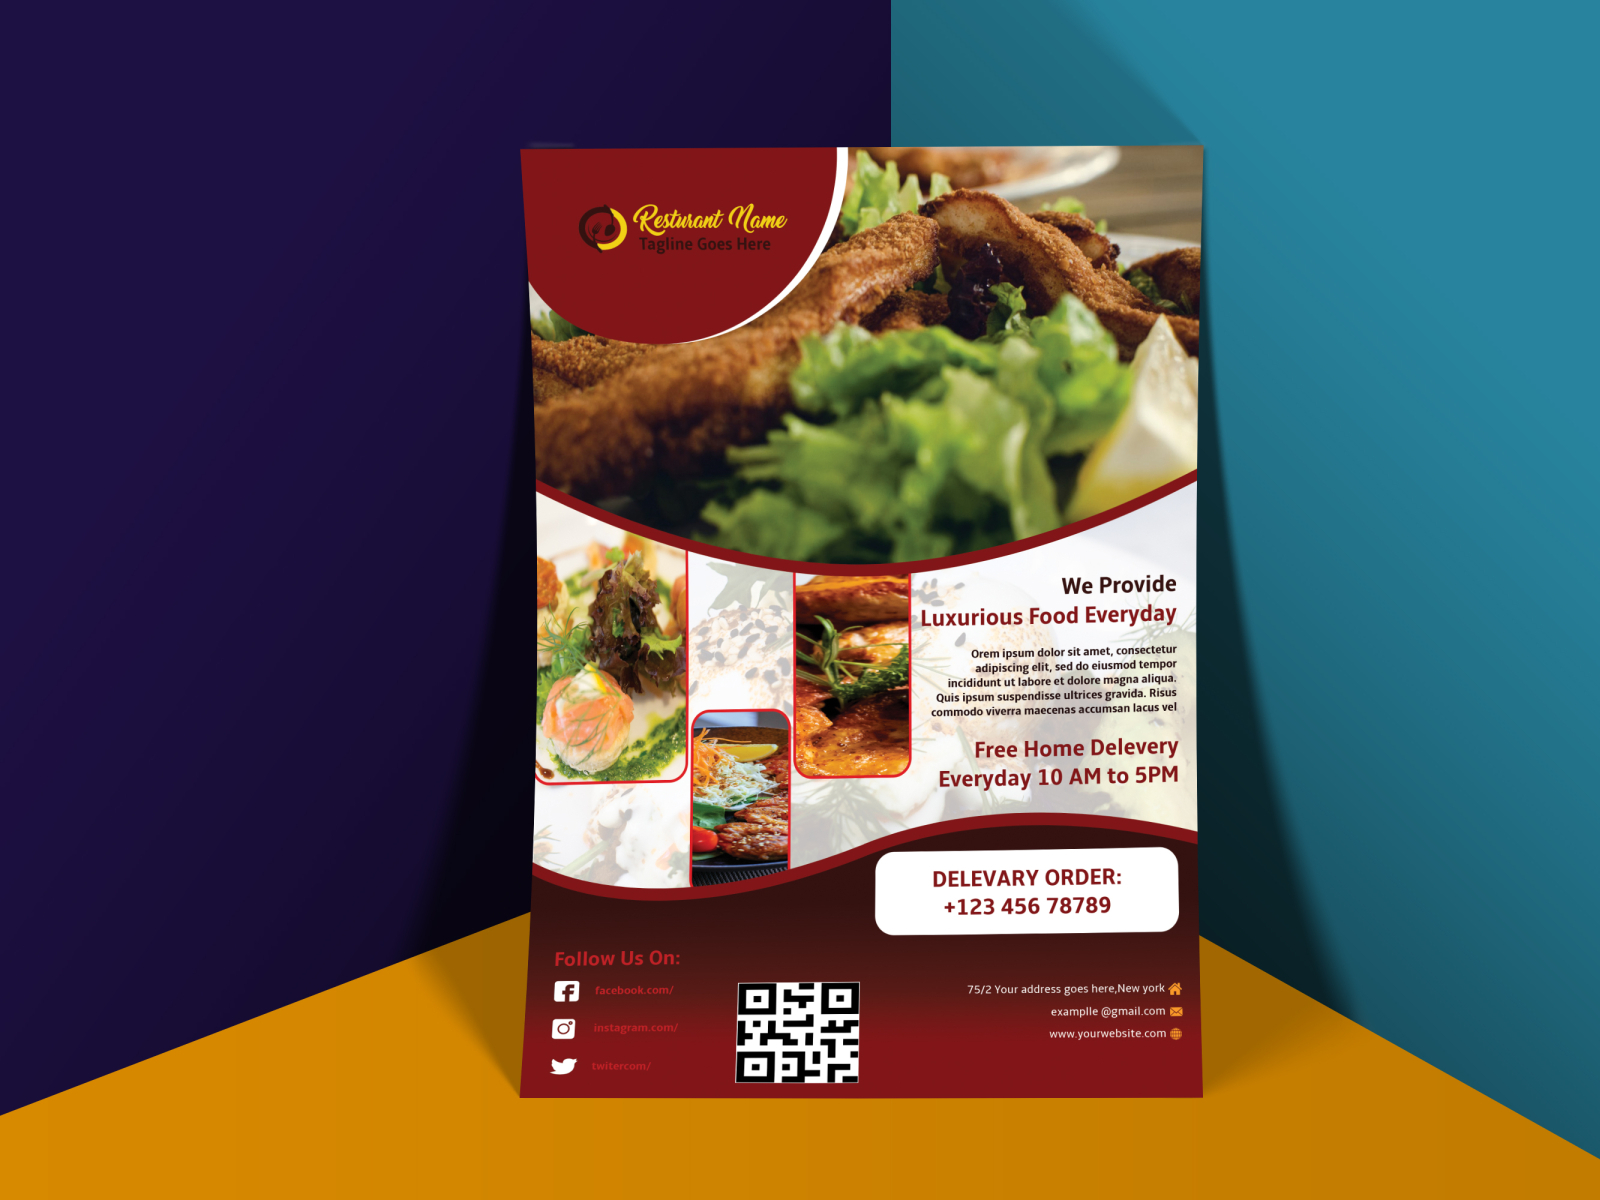 Restaurant flyer by md ashraf uddin on Dribbble